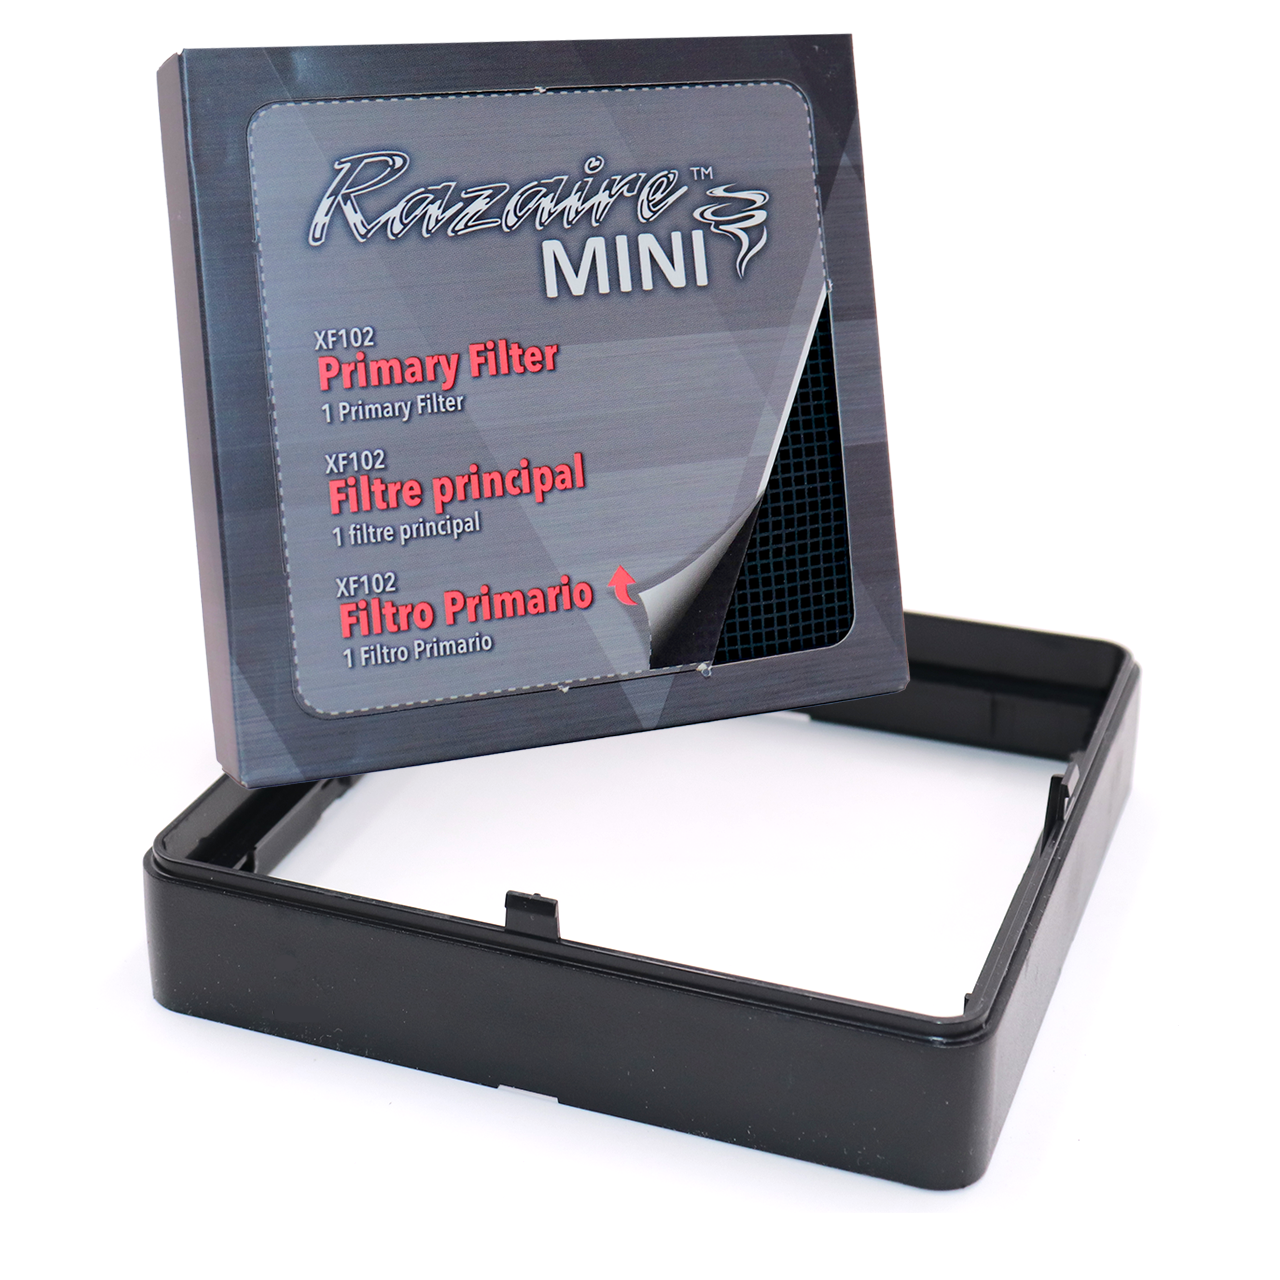 Razaire Mini - X60 Primary Filter Expansion Kit XF200